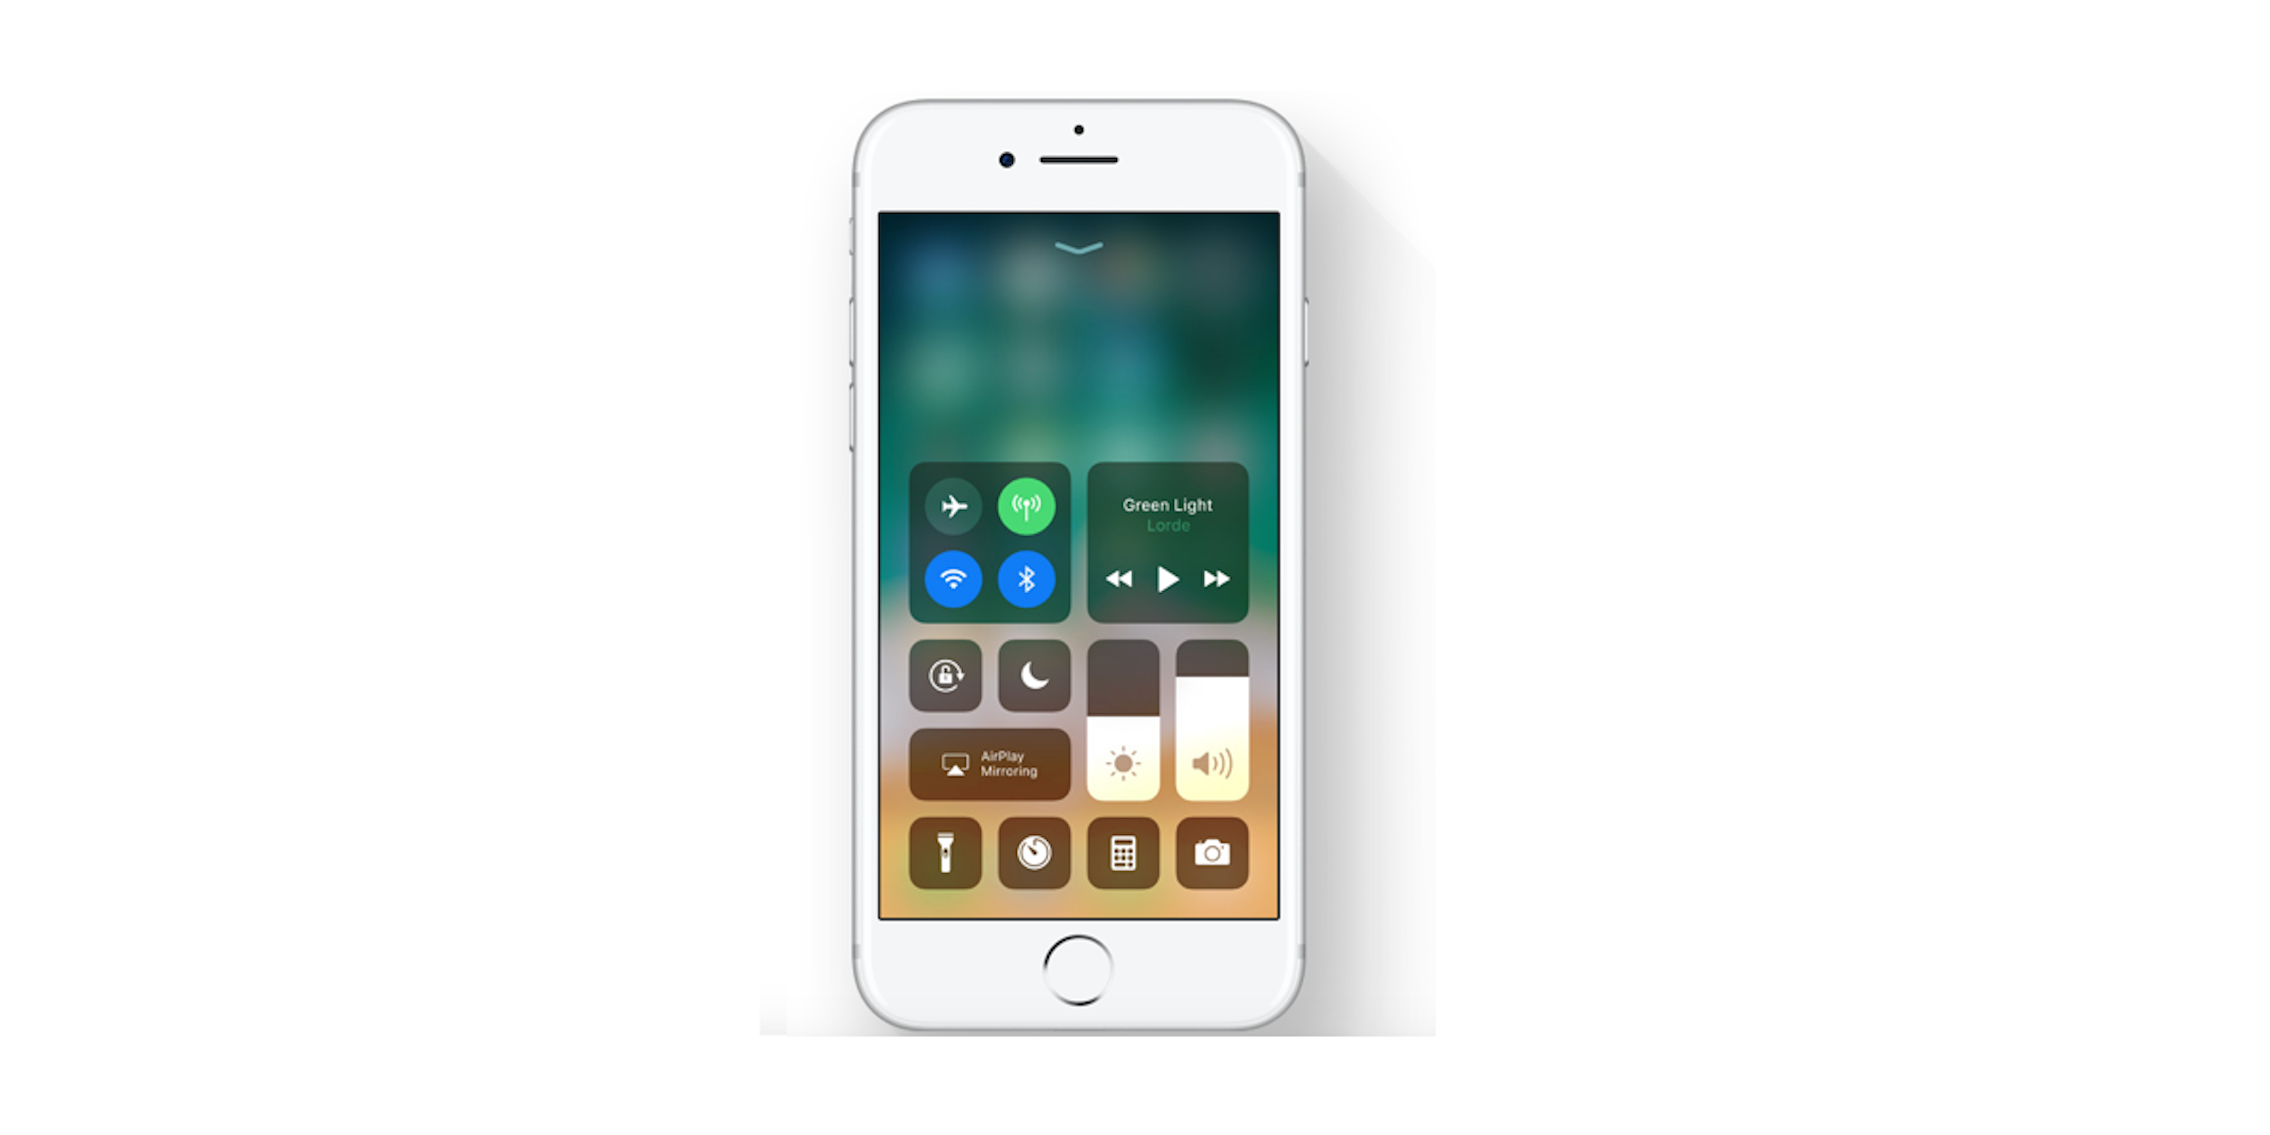 iOS 11 control center on iPhone